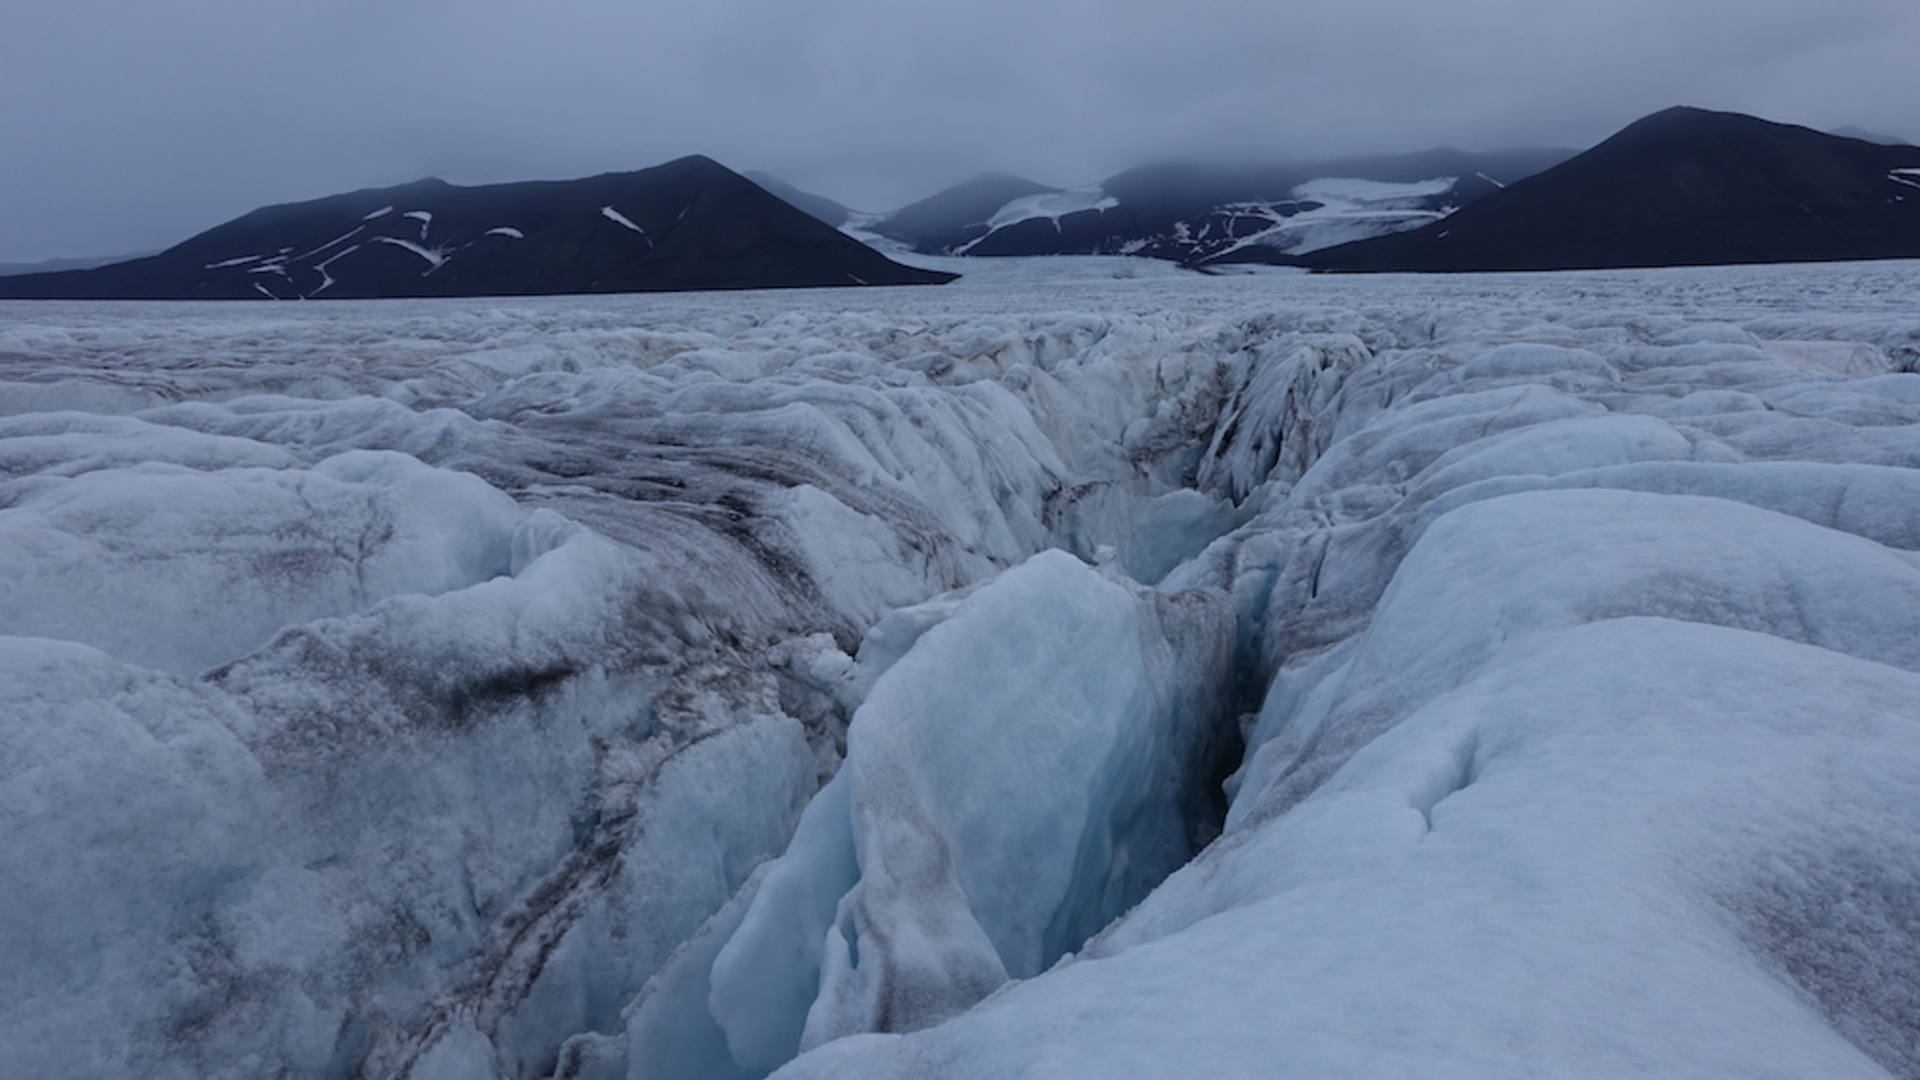 Southeastern Spitsbergen landscape-seascape and biodiversity dynamics under current climate warning.